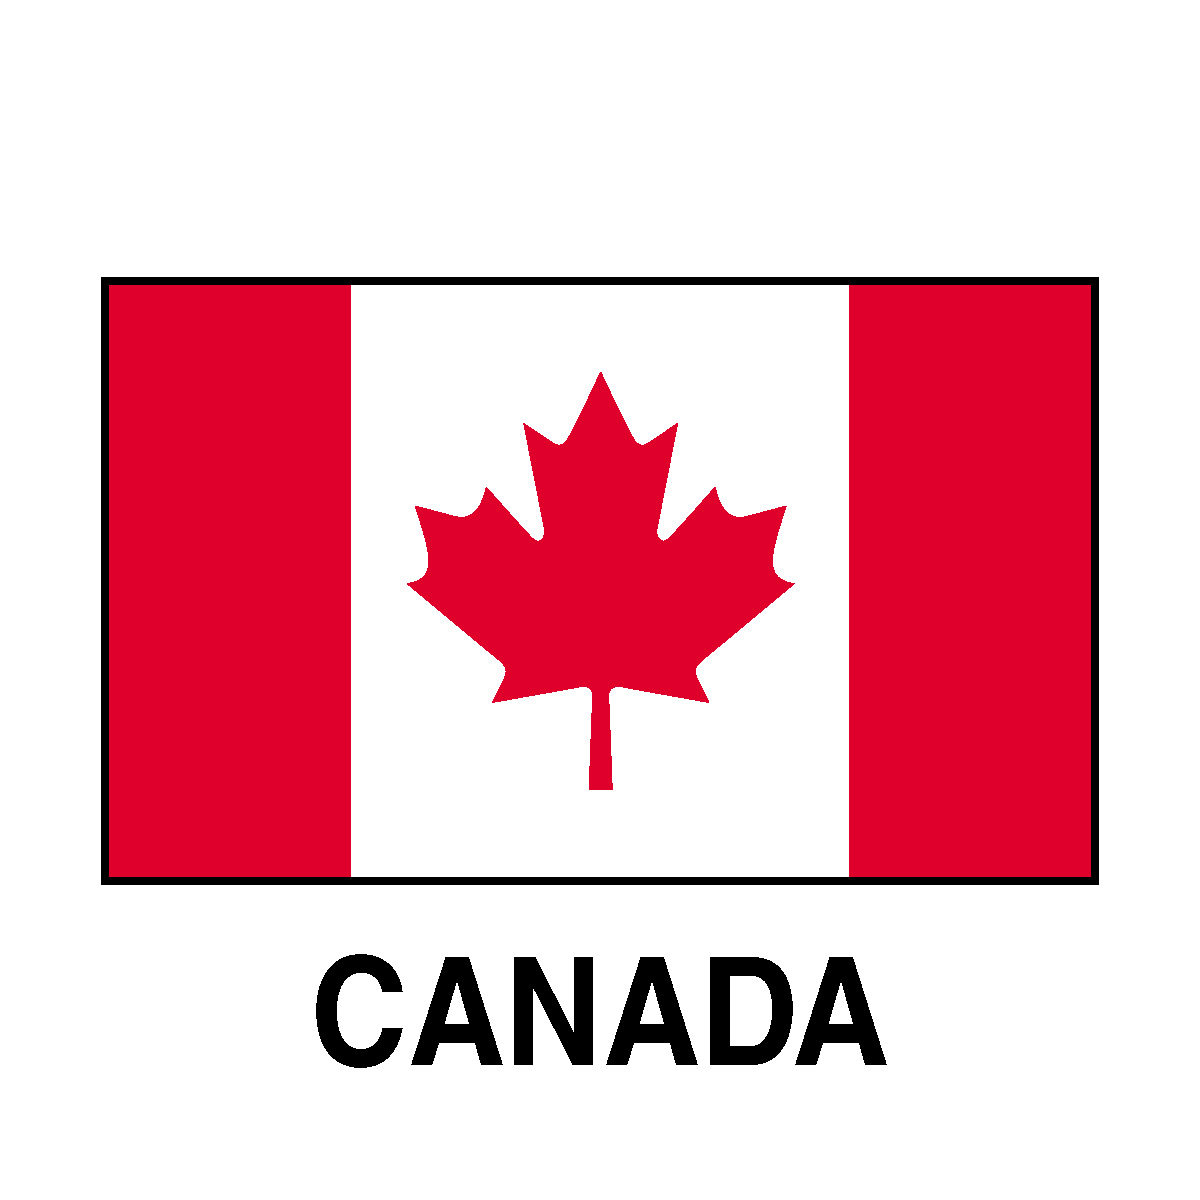 Canada Flag Images Dromfed Top Transparent Image Clipart